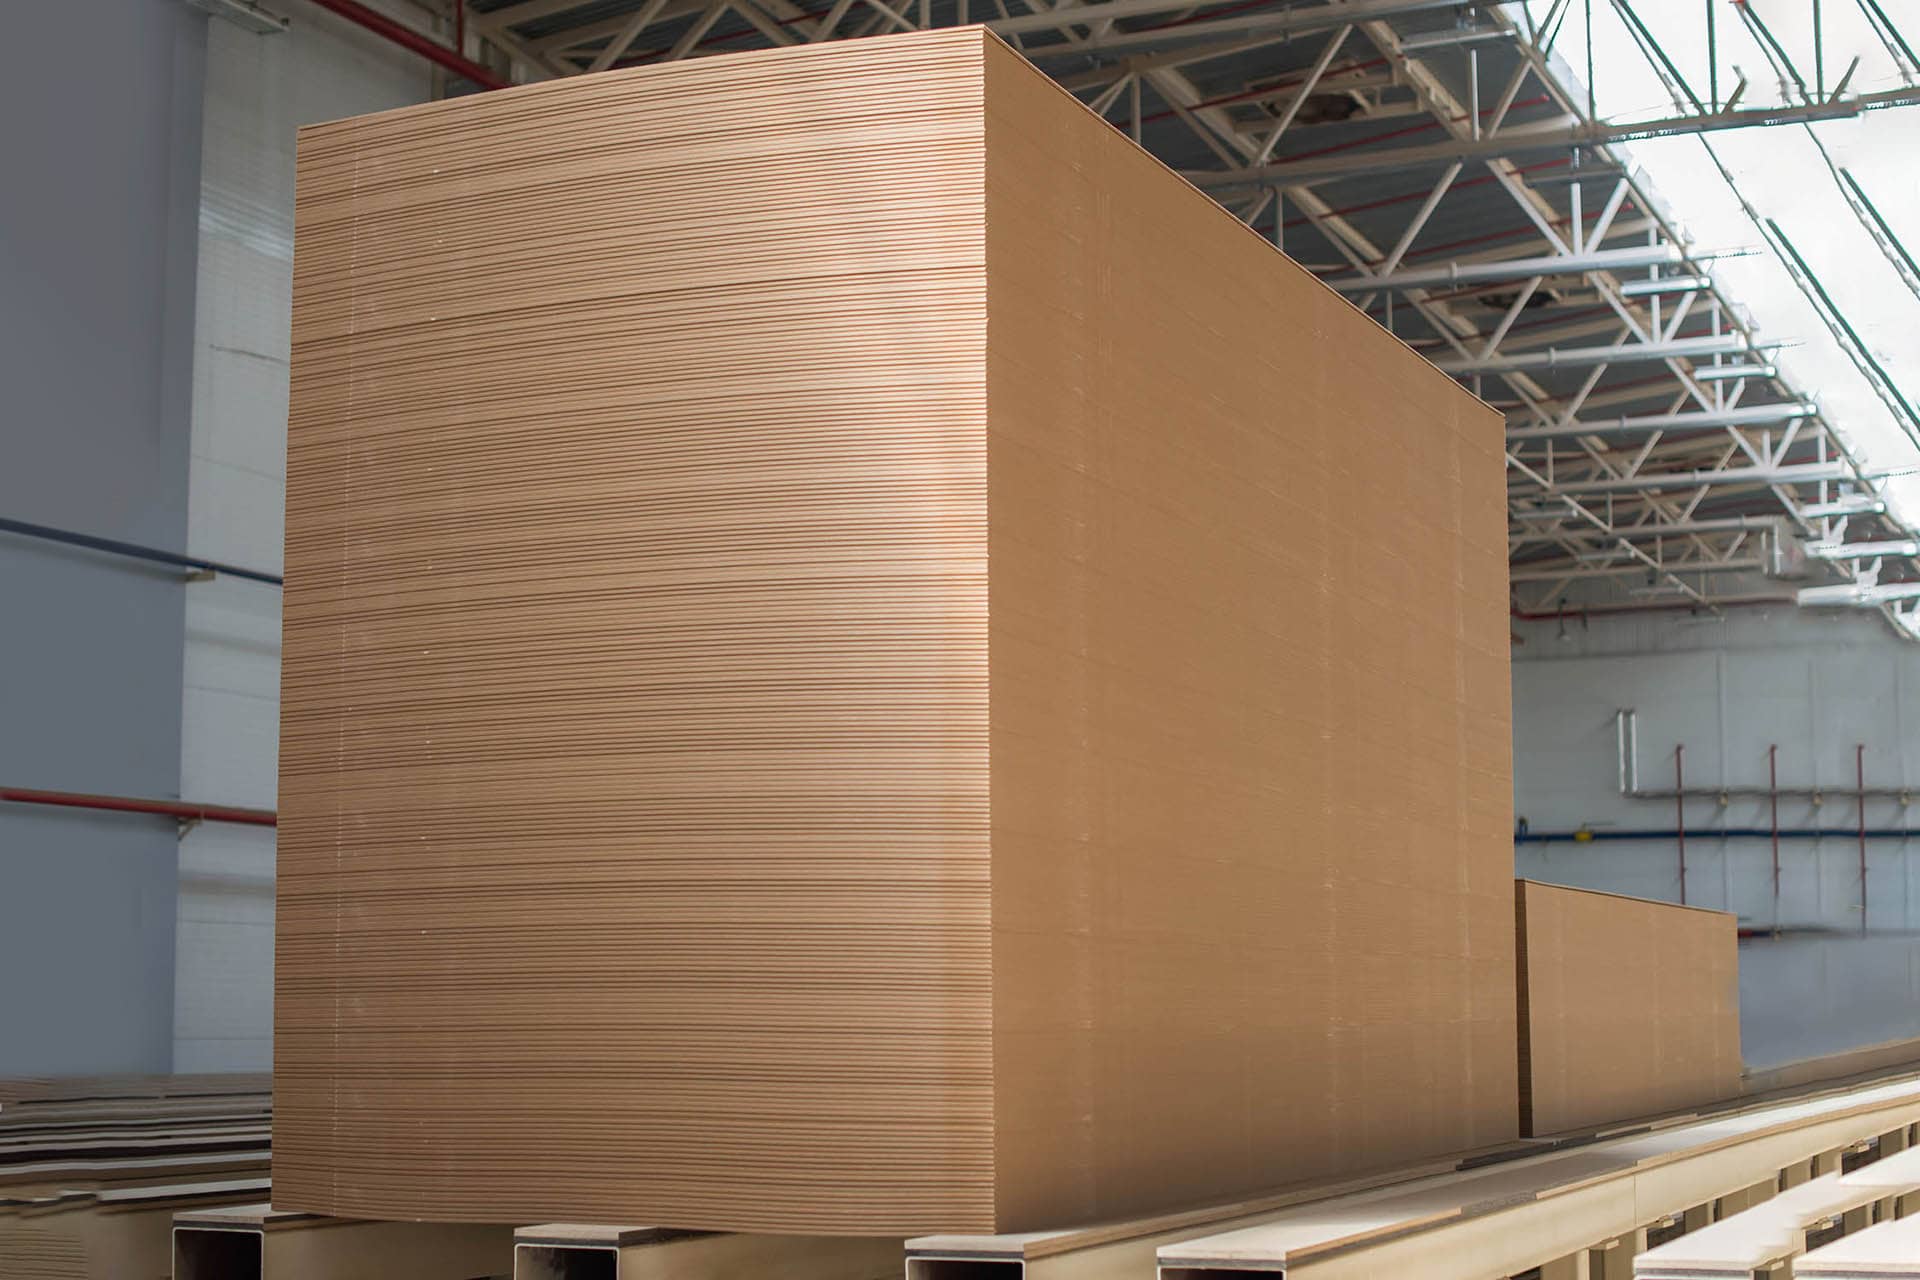 mdf board (multi-density fibreboard) internal large size sheet materials